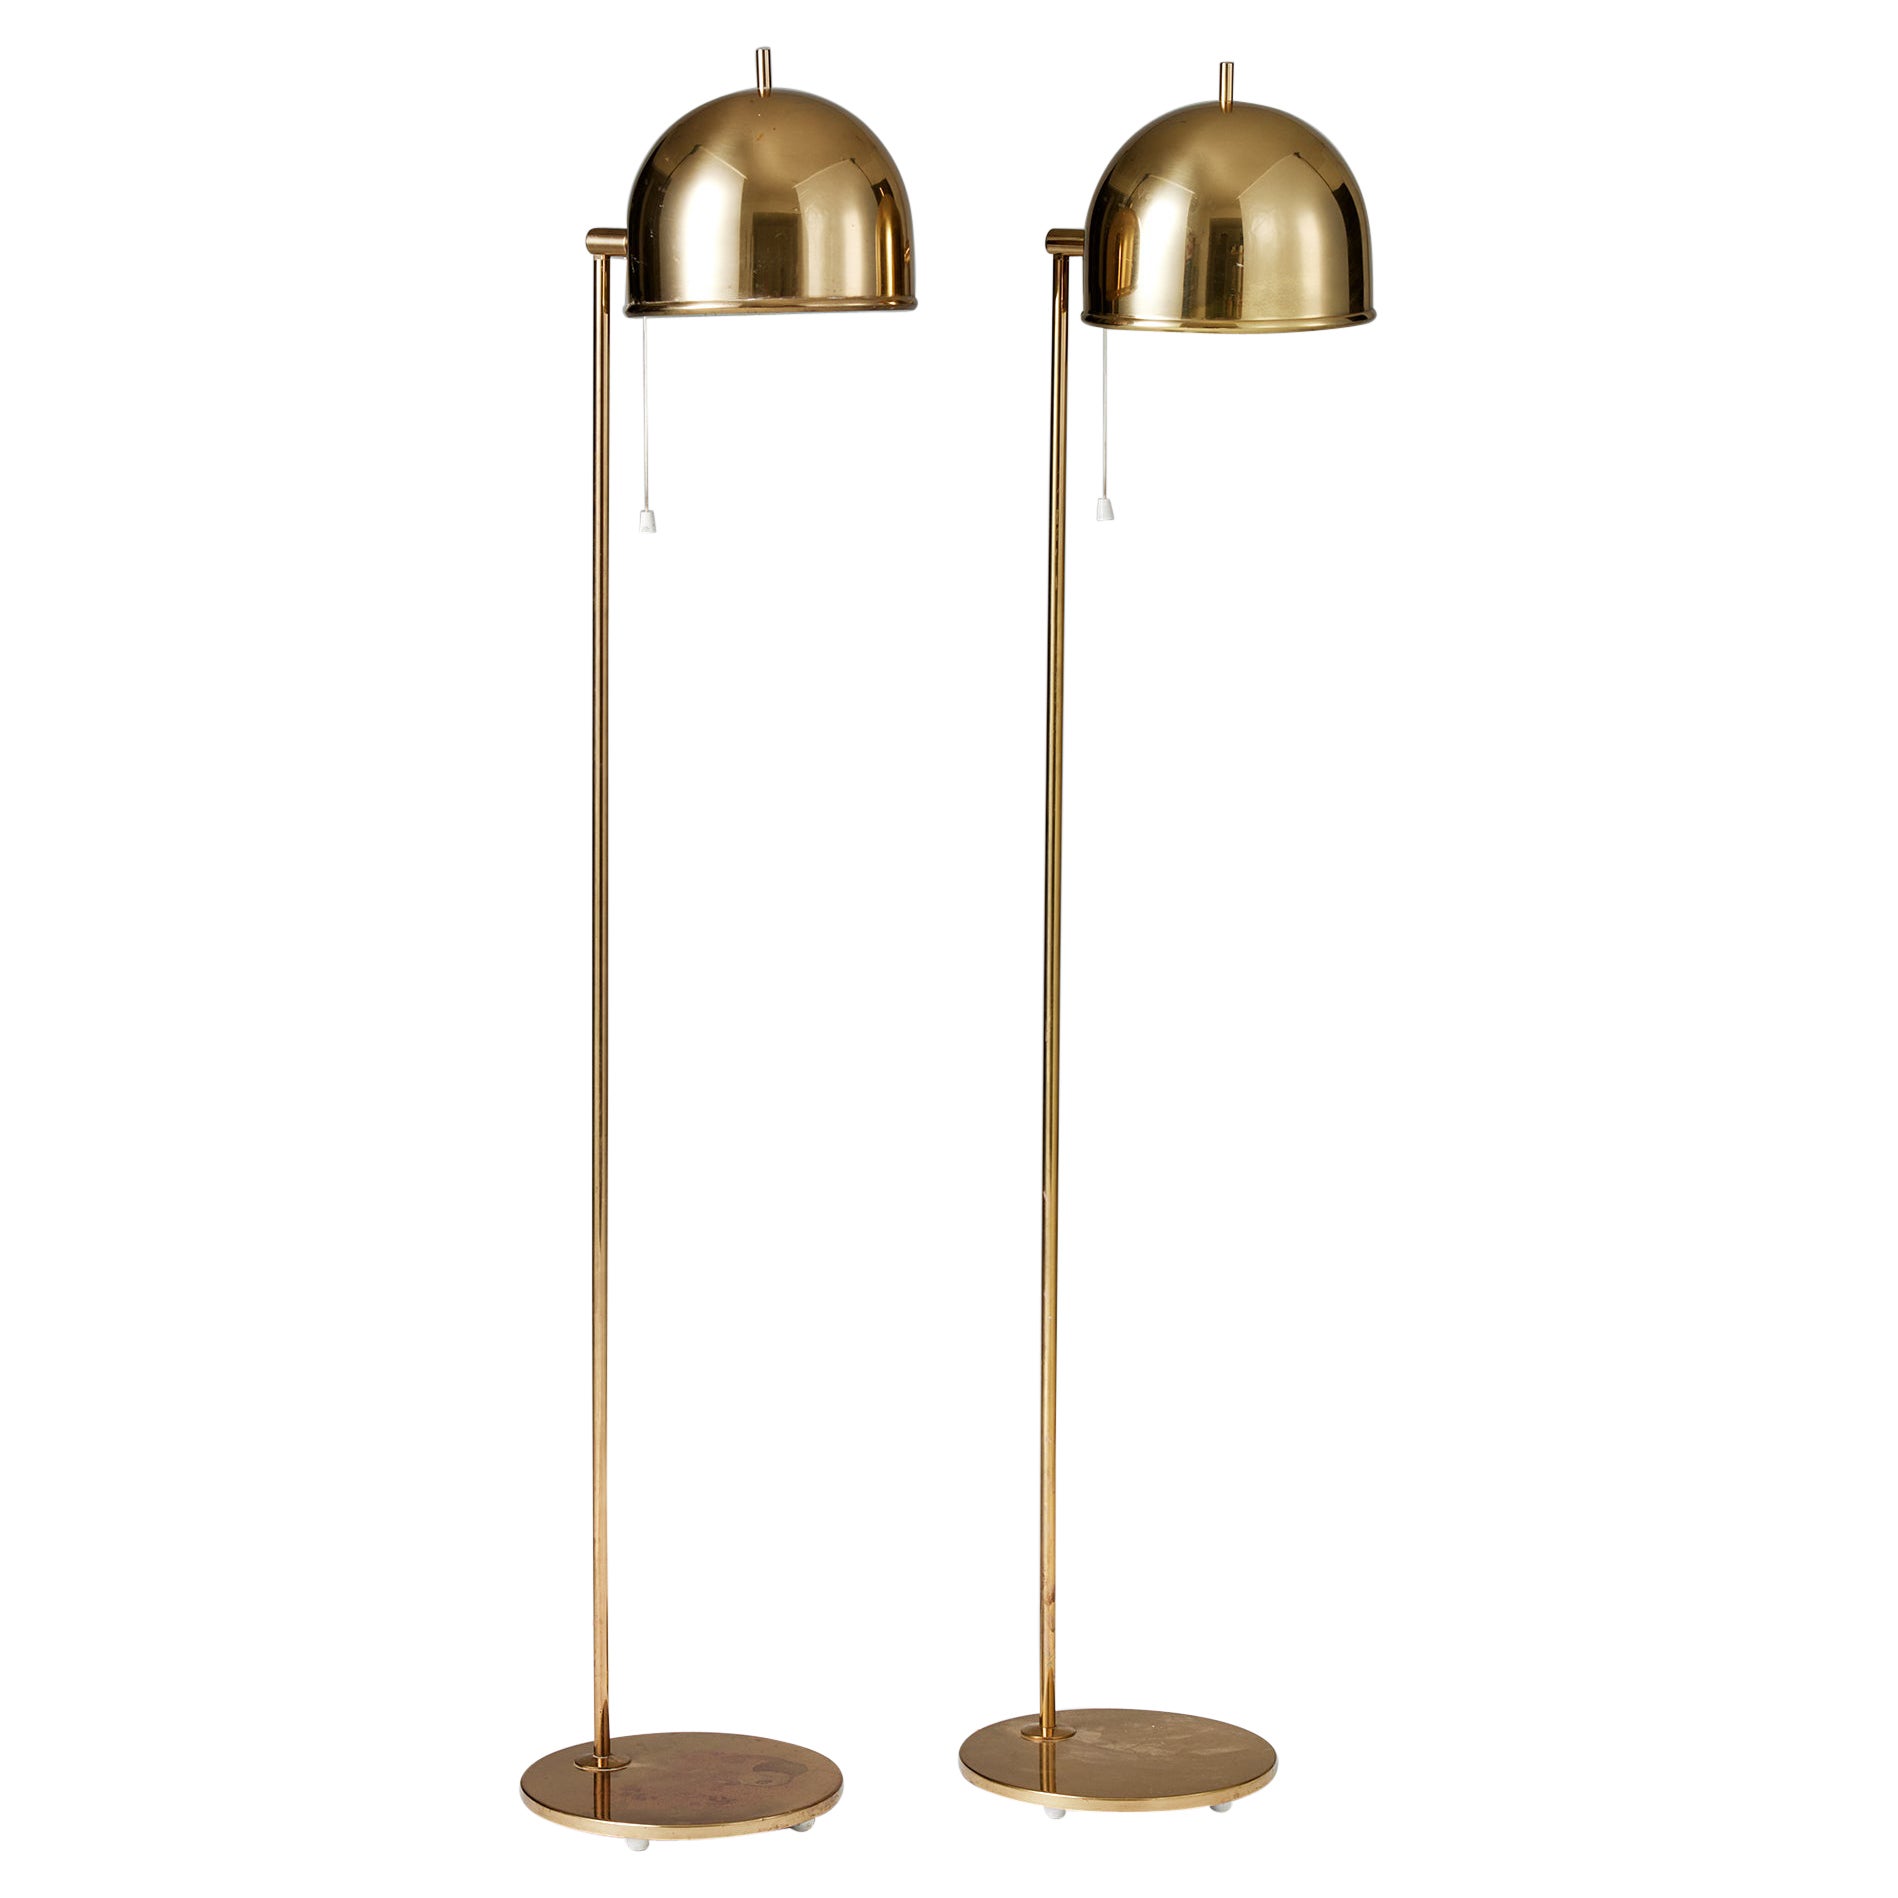 Pair of floor lamps model G-075 designed by Eje Ahlgren for Bergboms, Sweden For Sale